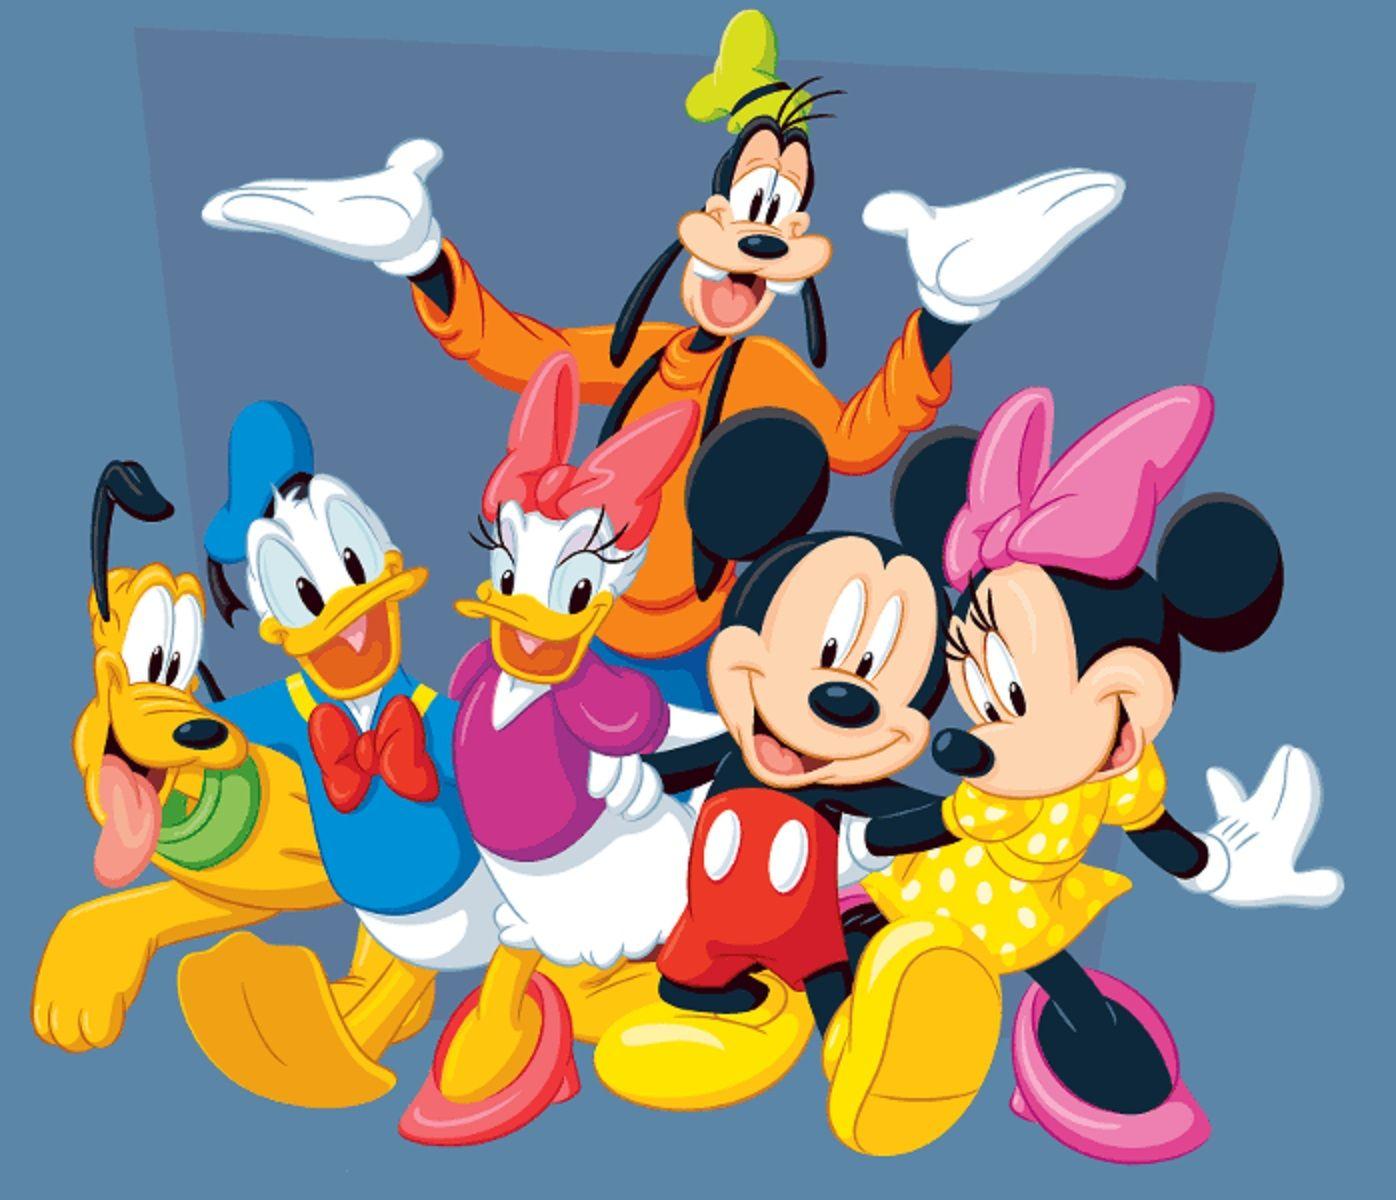 Disney Cartoon Wallpaper for Desktop. Desktop Wallpaper